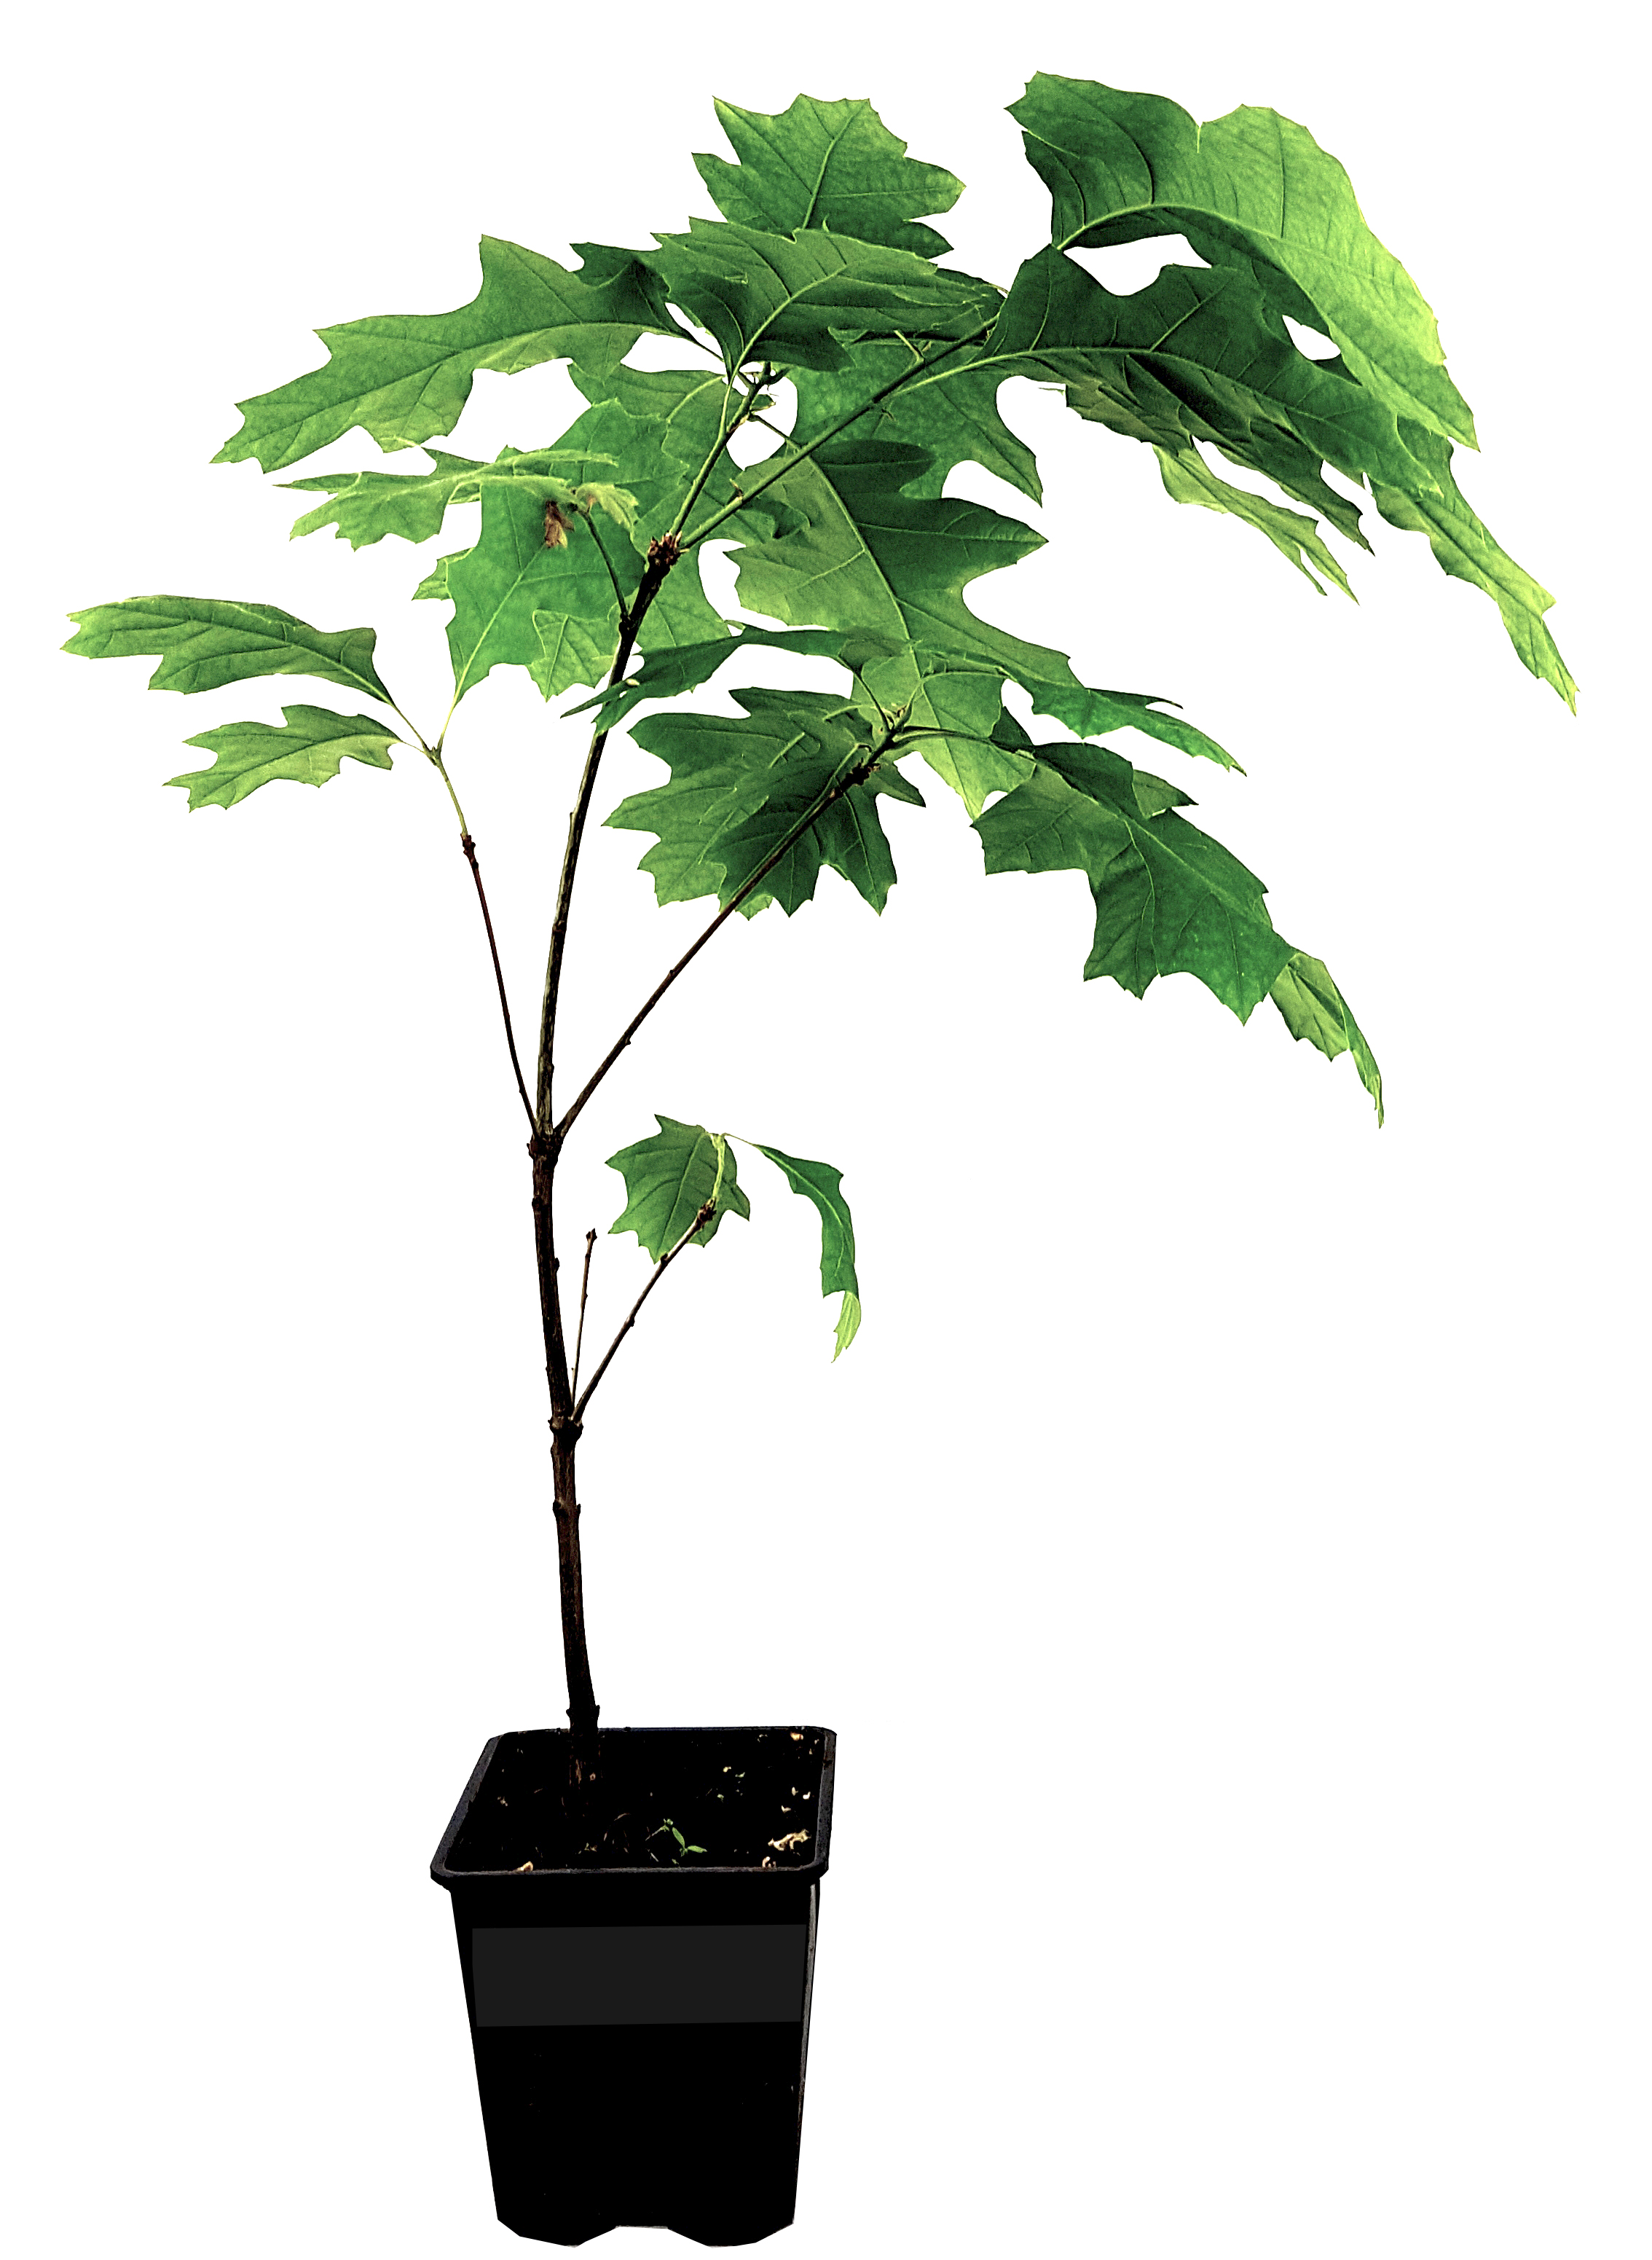 Seedeo® Scharlach-Eiche (Quercus coccinea) Pflanze ca. 50 cm - 80 cm hoch